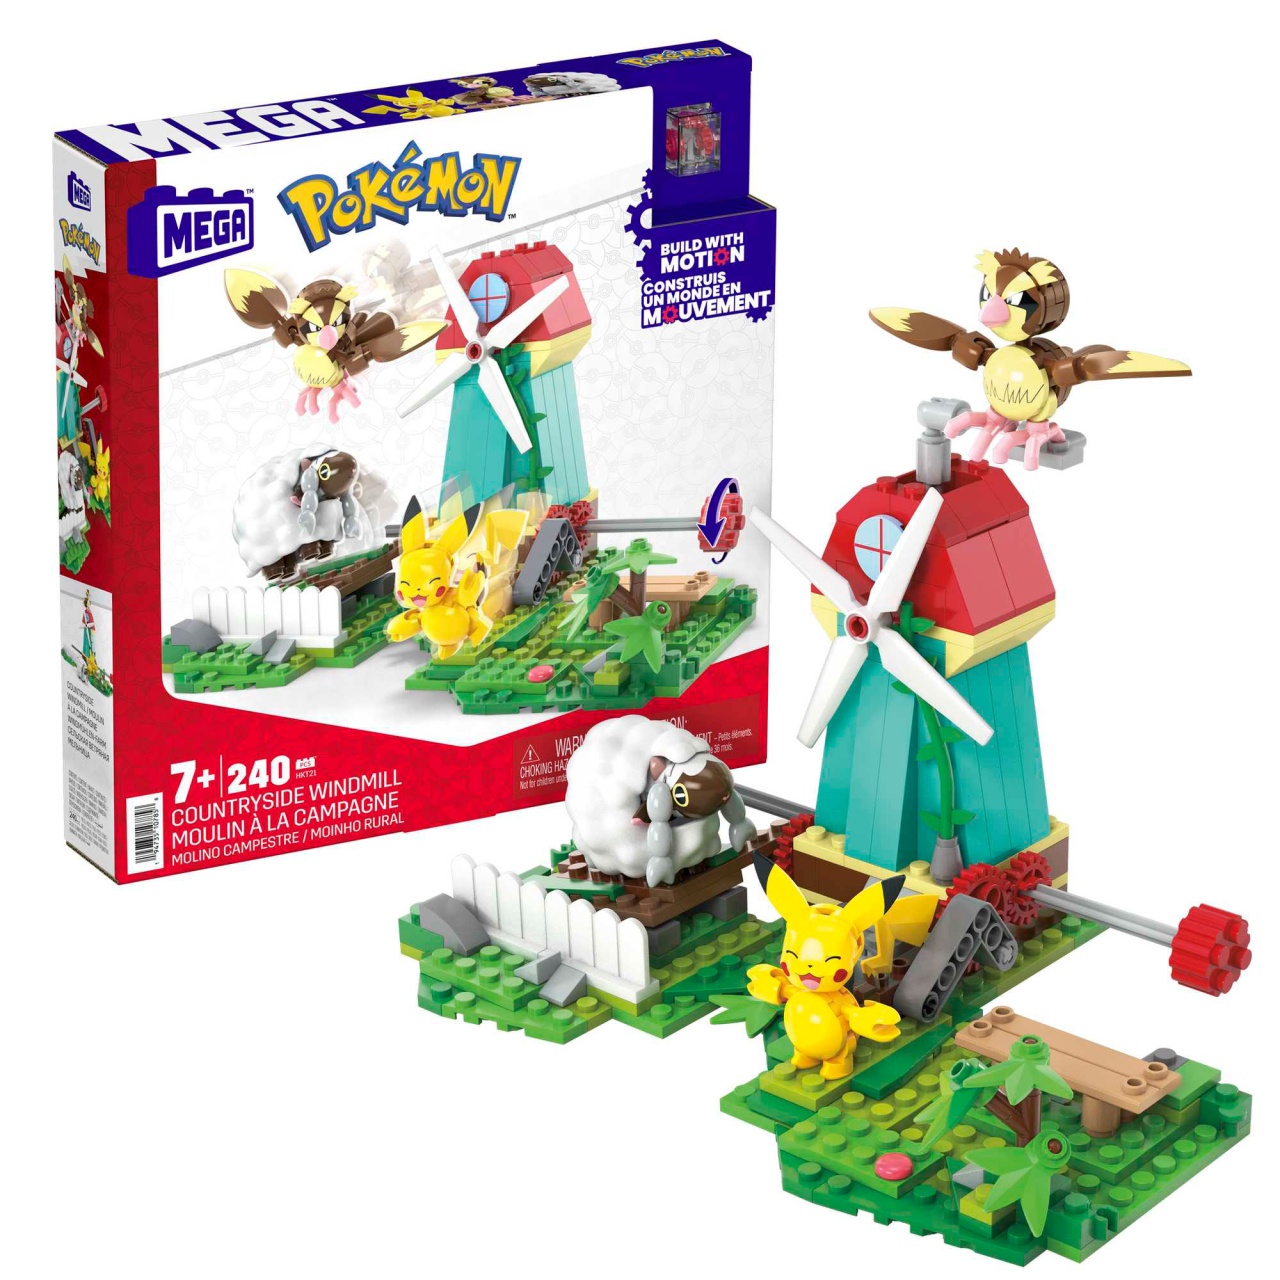 MEGA Pokemon Windmühlen-Farm von Mattel